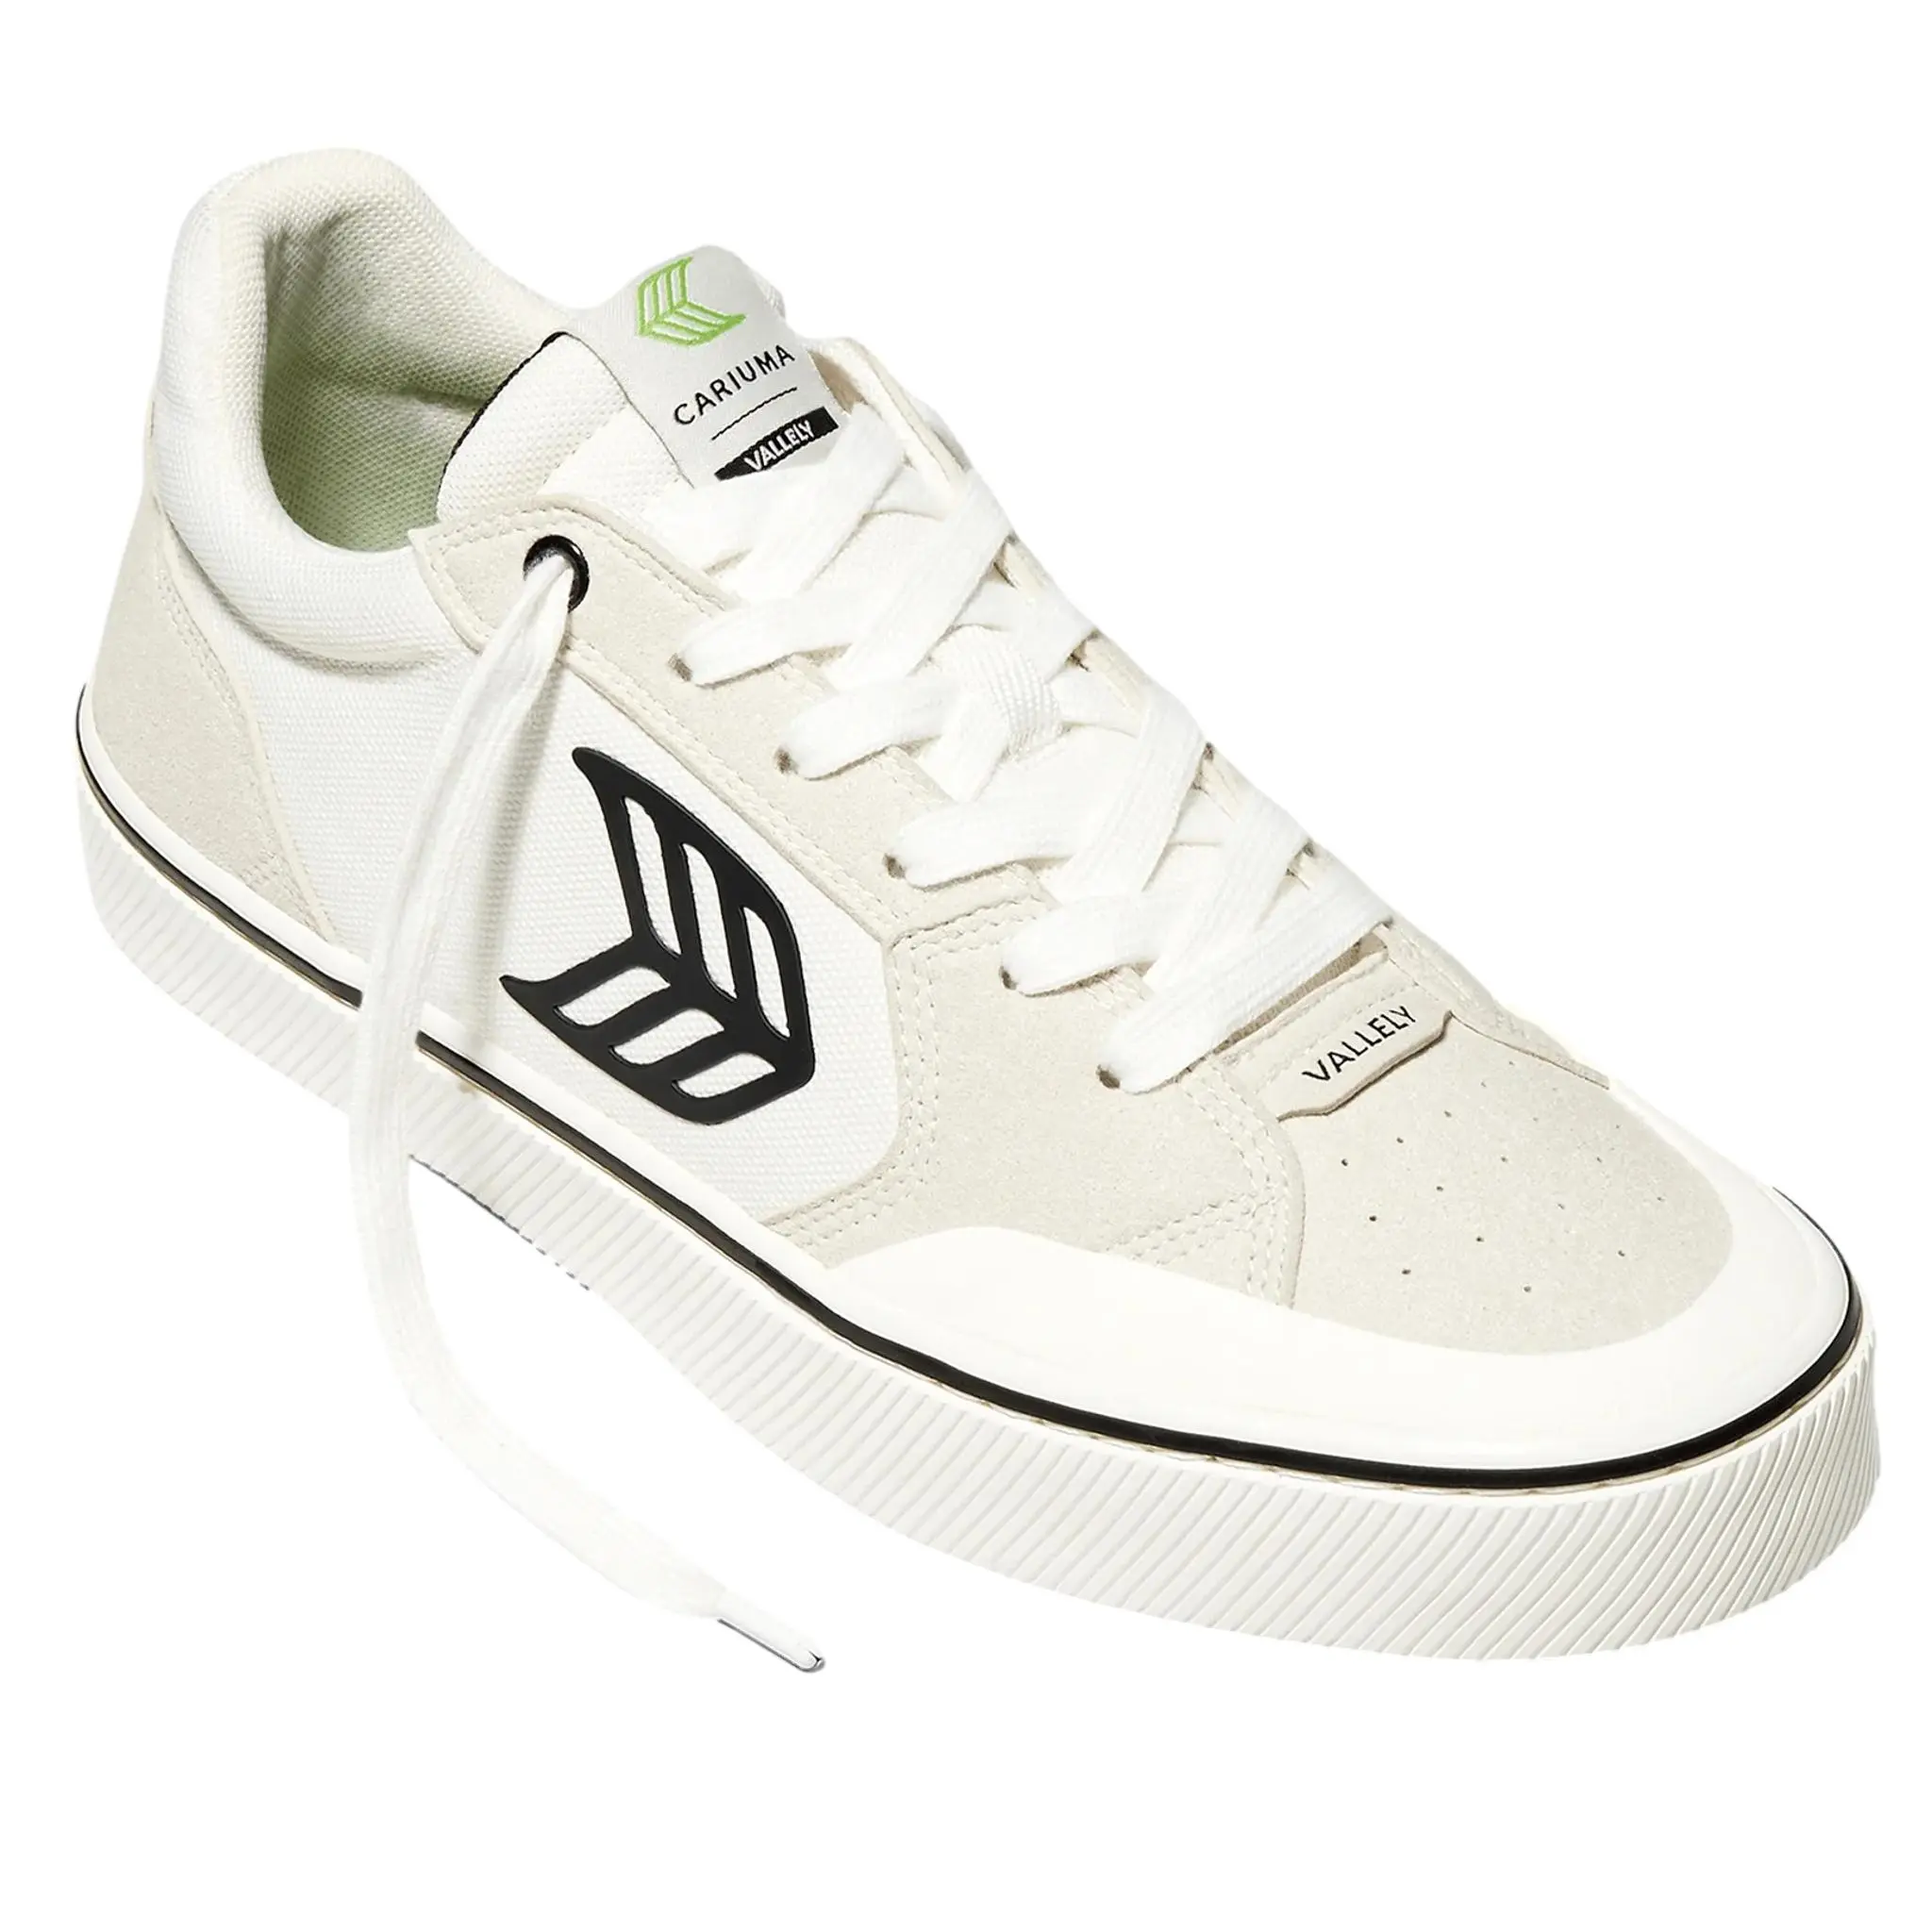 Cariuma Shoes white Pro Skate vallely